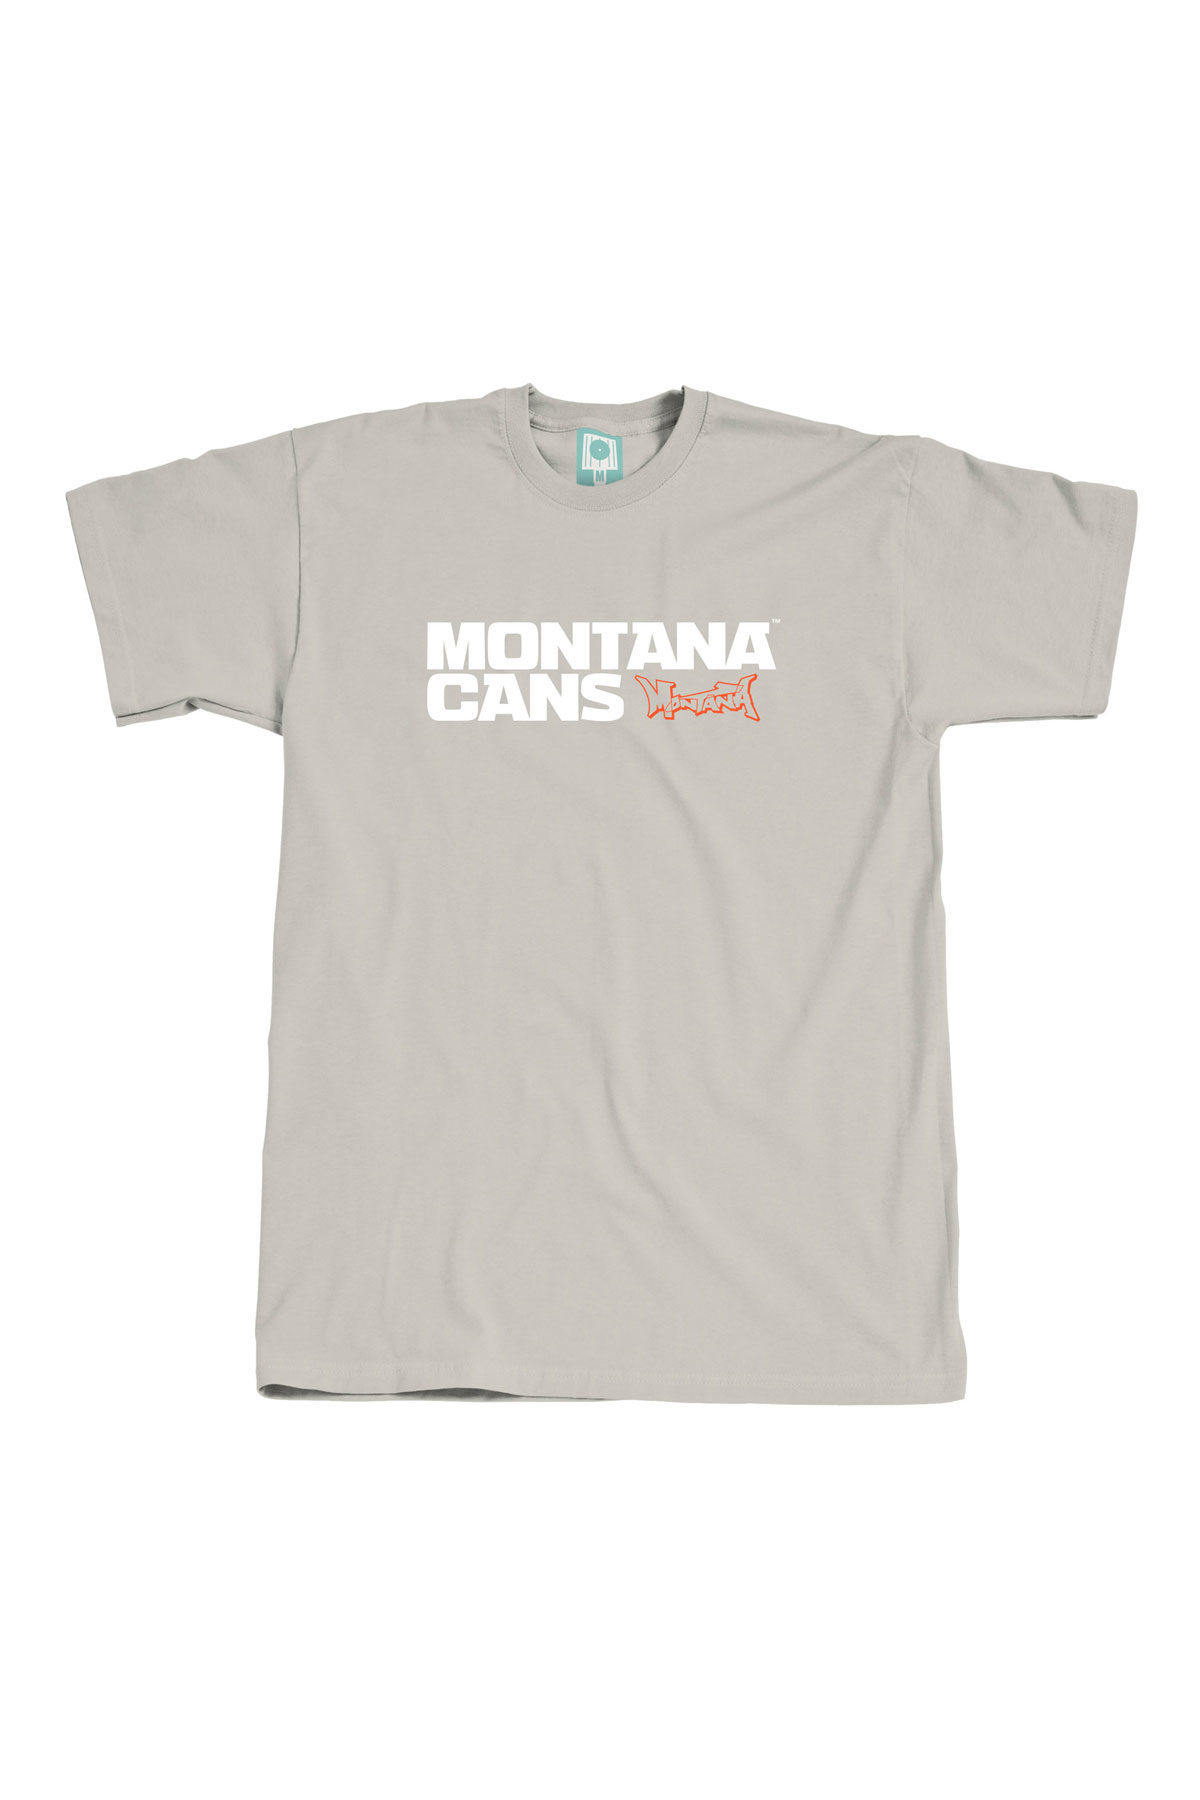 Montana TYPO+LOGO Buzzard T-Shirt